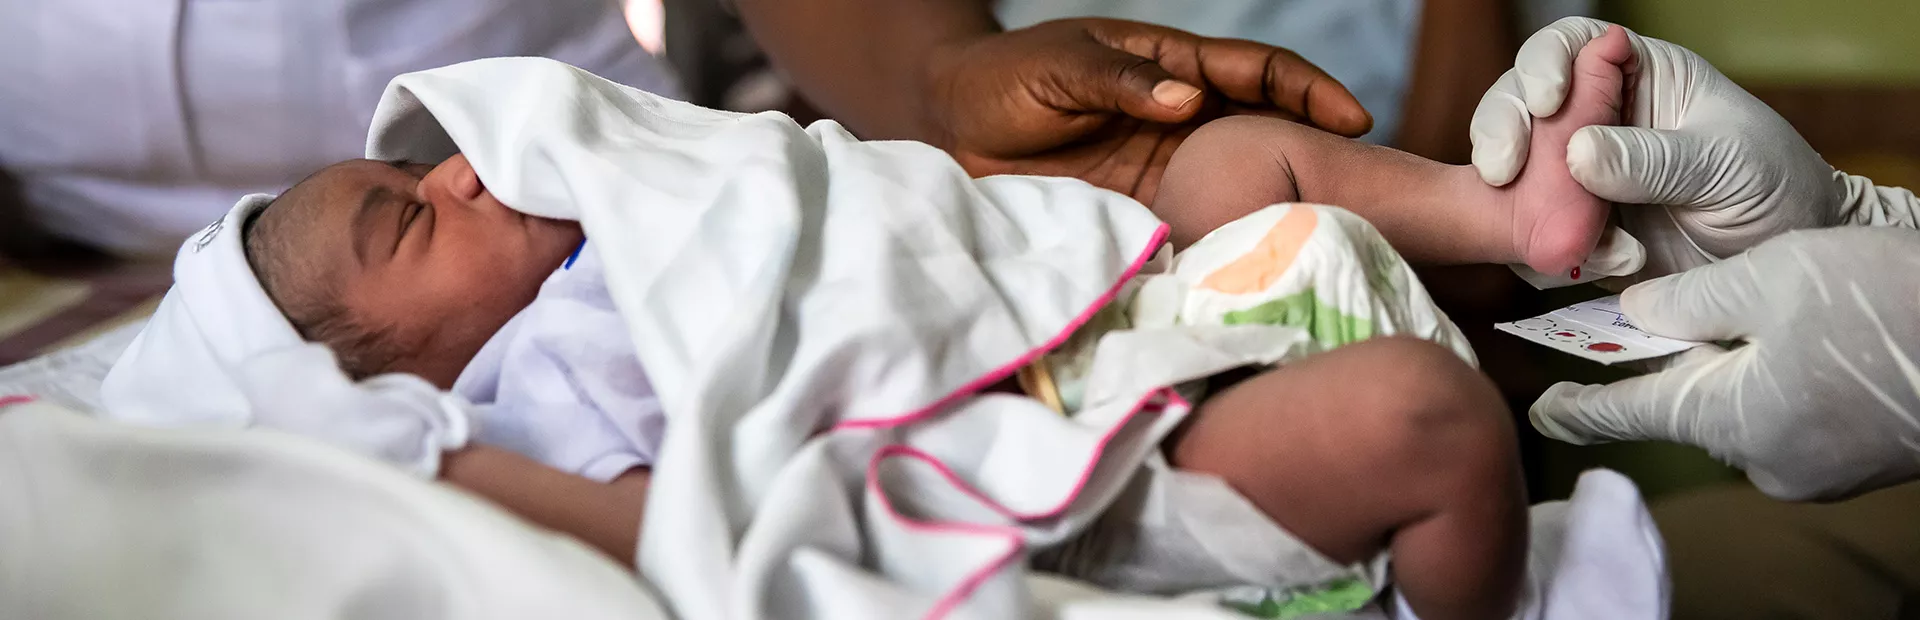 A sickle cell screening program for newborns at Kumasi General Hospital